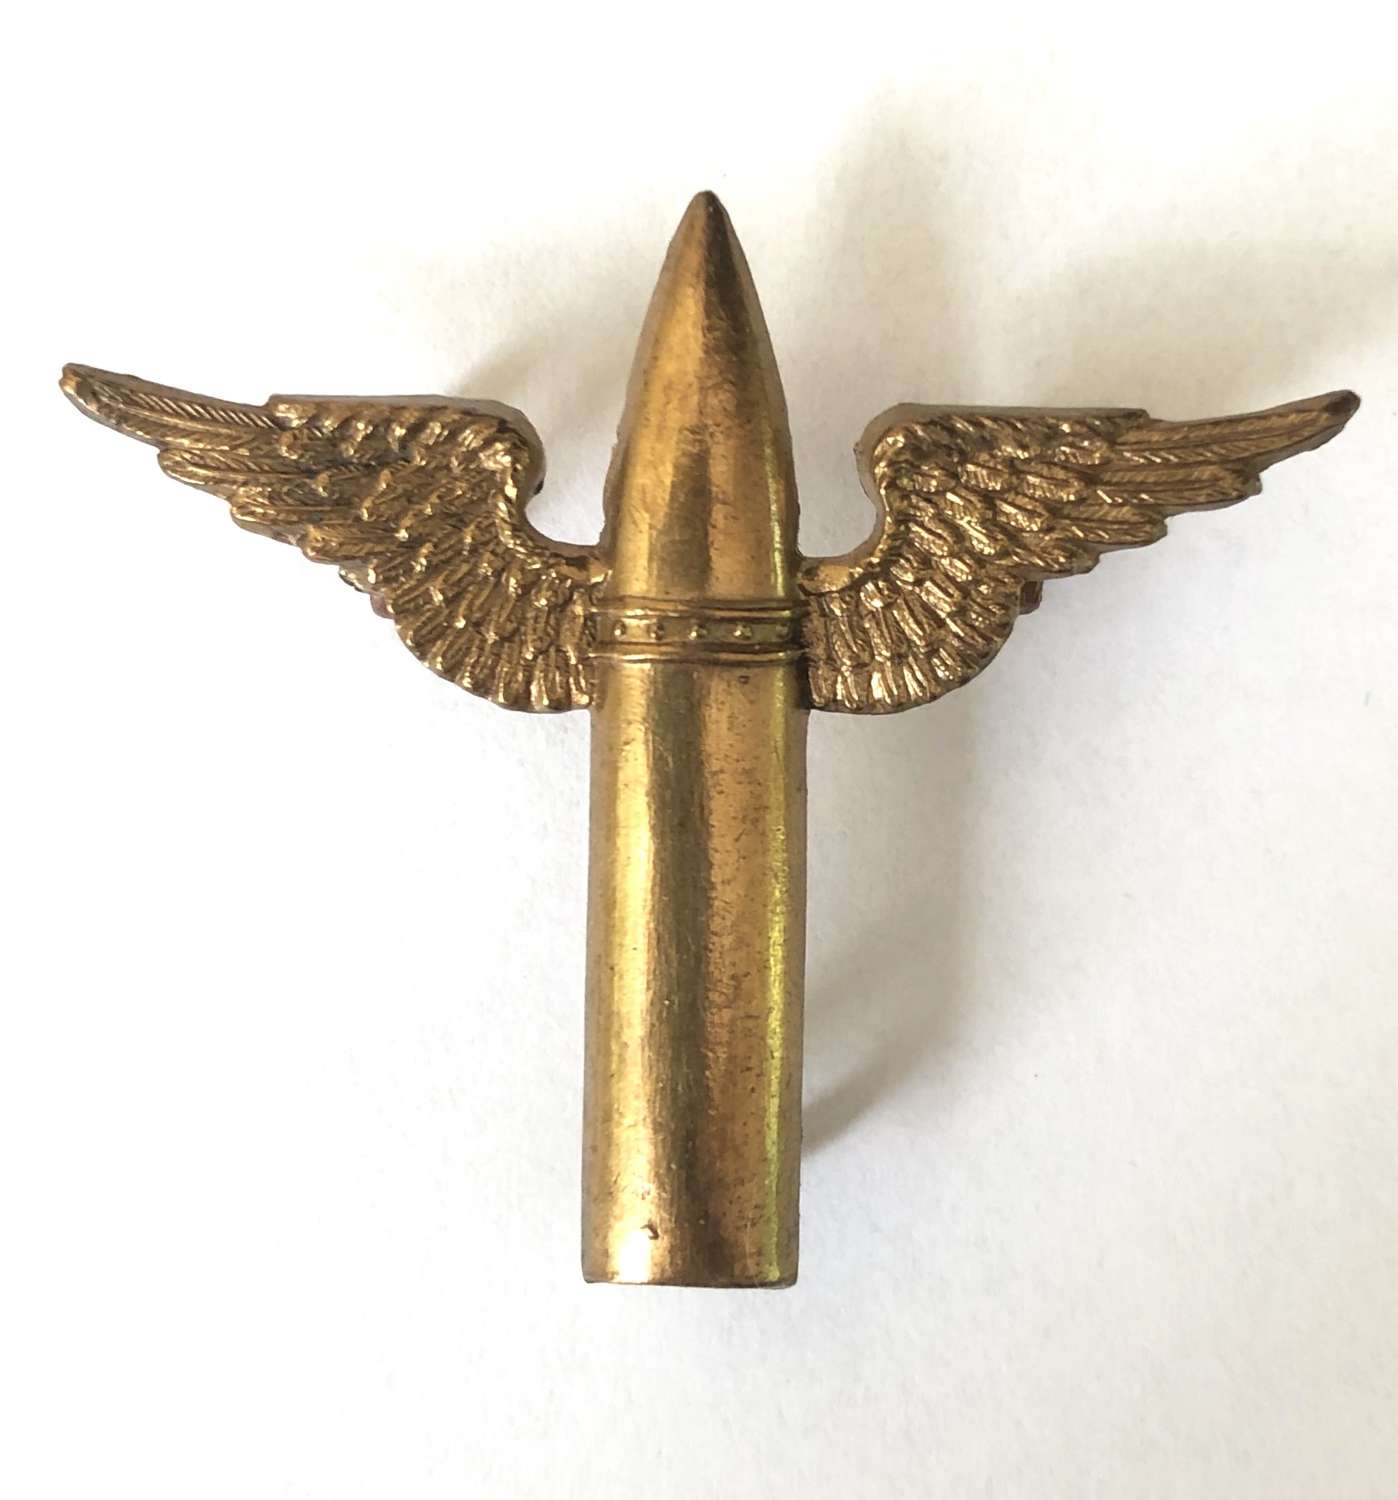 RAF Air Gunner’s winged bullet brass arm badge circa 1923-39